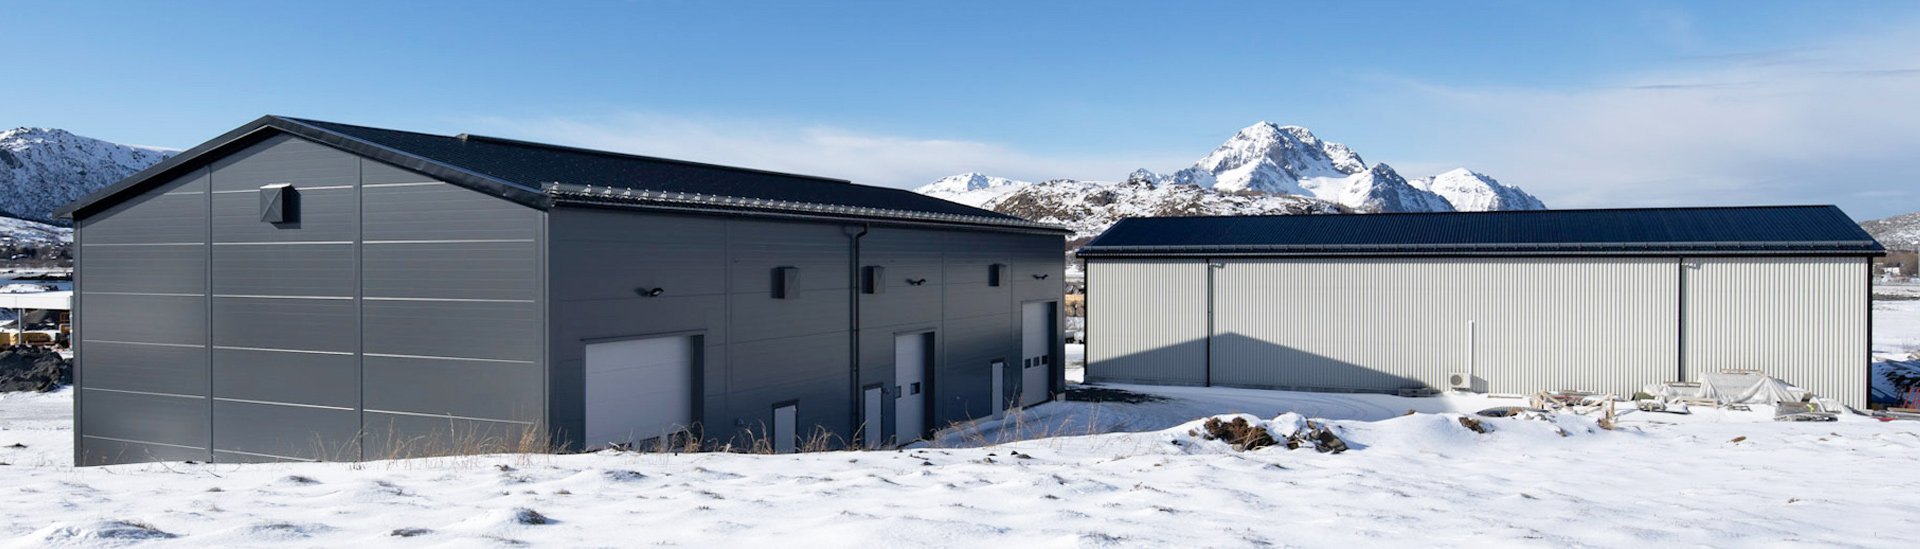 LLENTAB storage building in winter